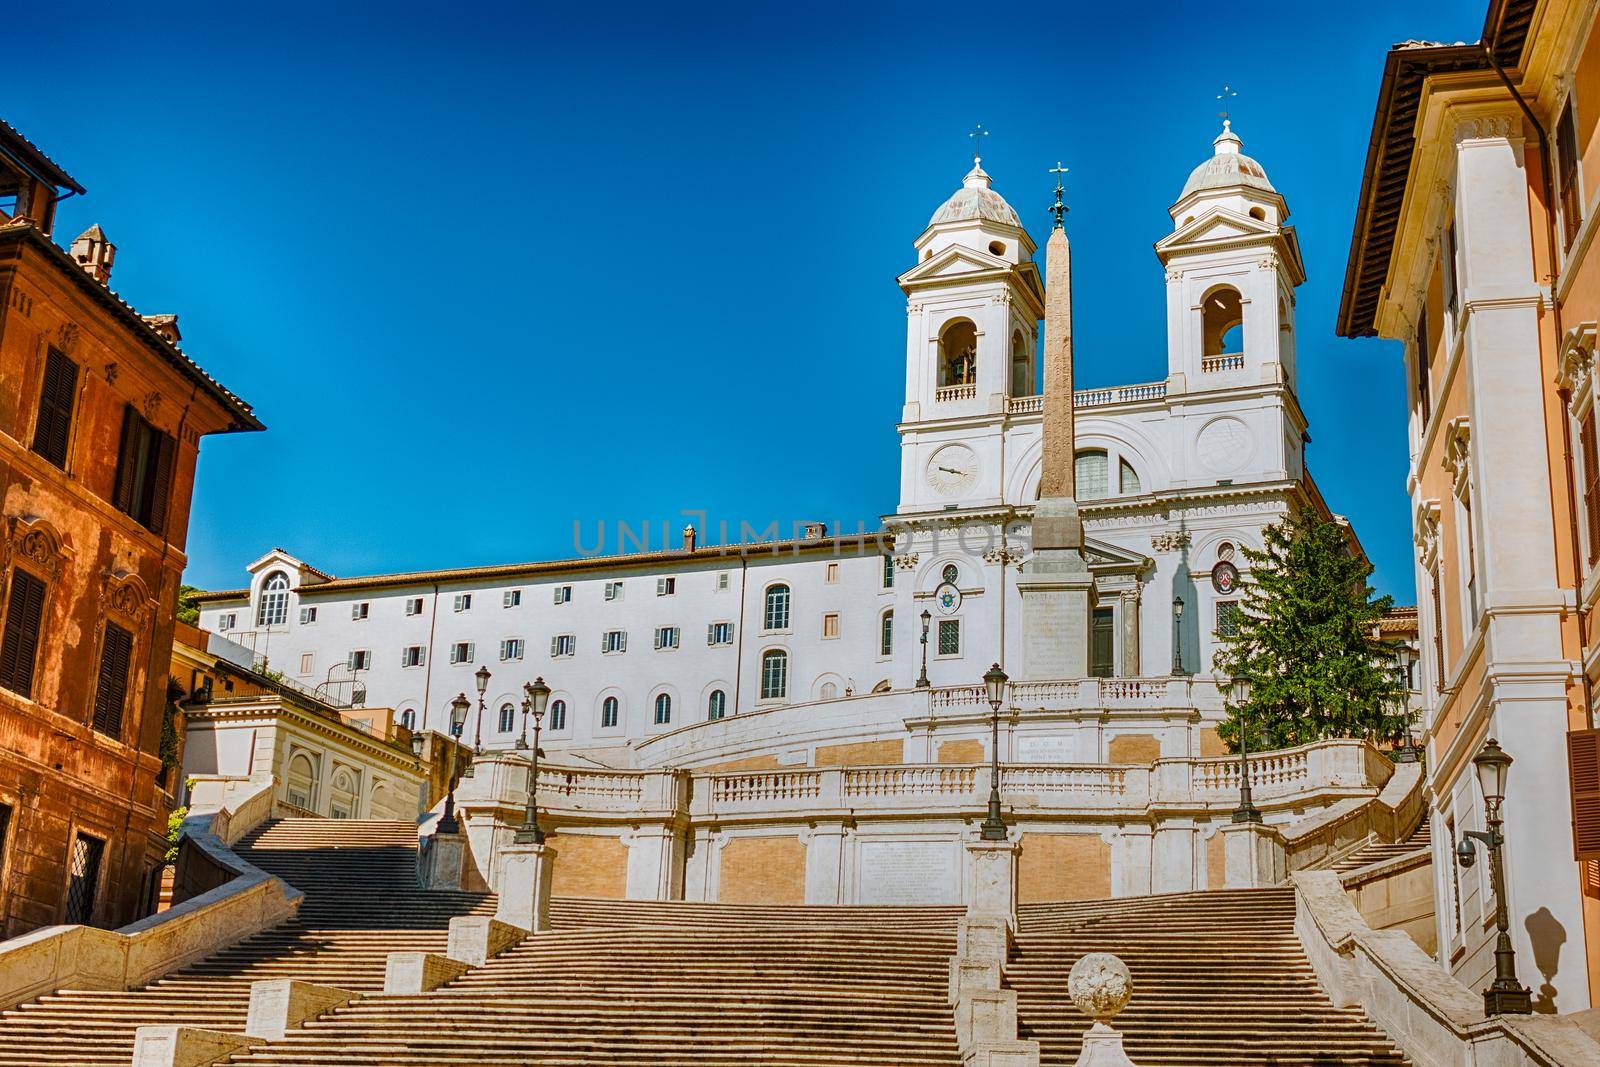 Church of Trinita dei Monti, iconic landmark in Rome, Italy by marcorubino